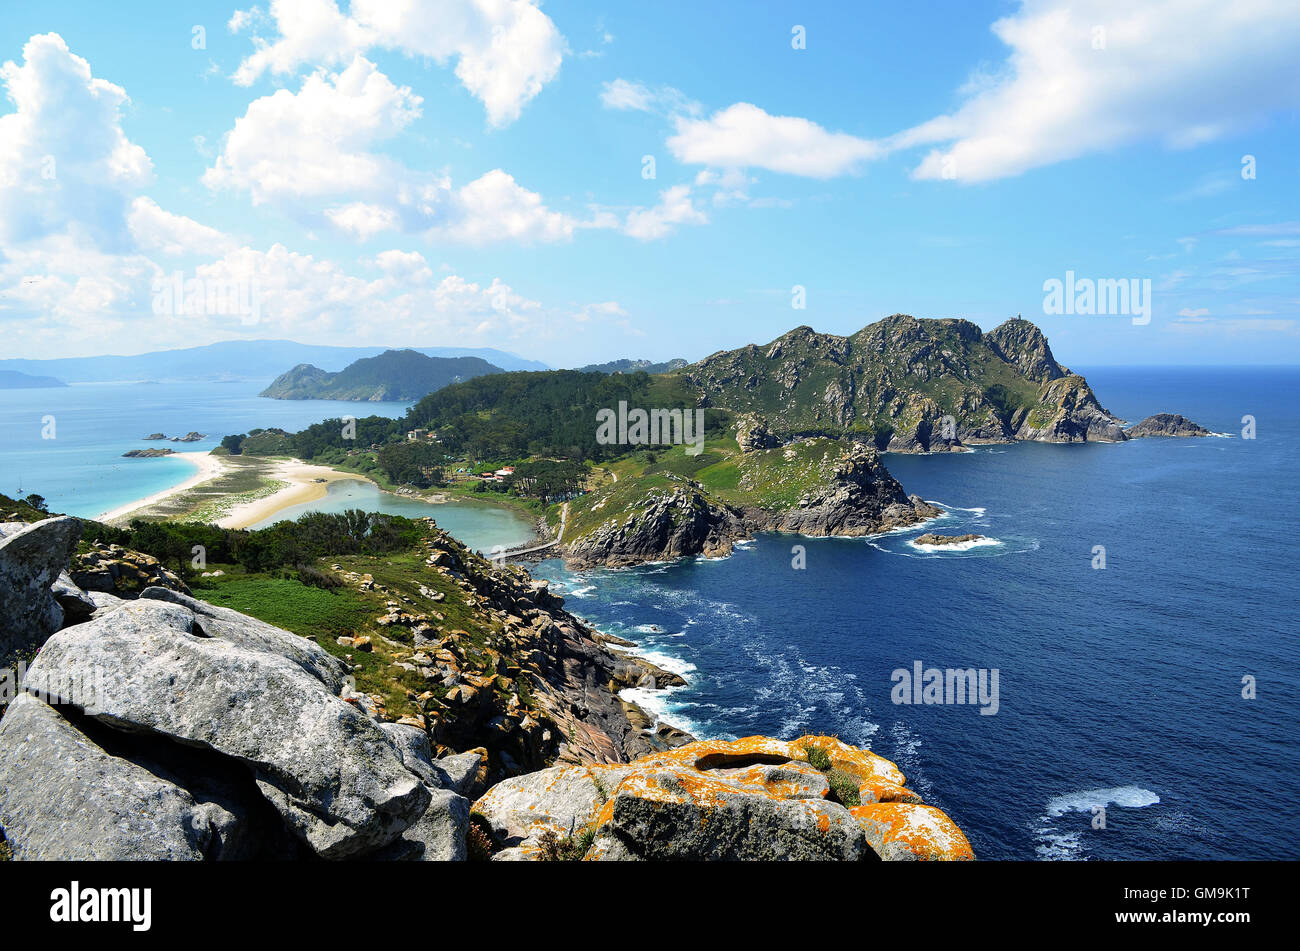 The Islas Cies Islands, in the mouth of the Ria de Vigo (Galicia, Spain) Stock Photo